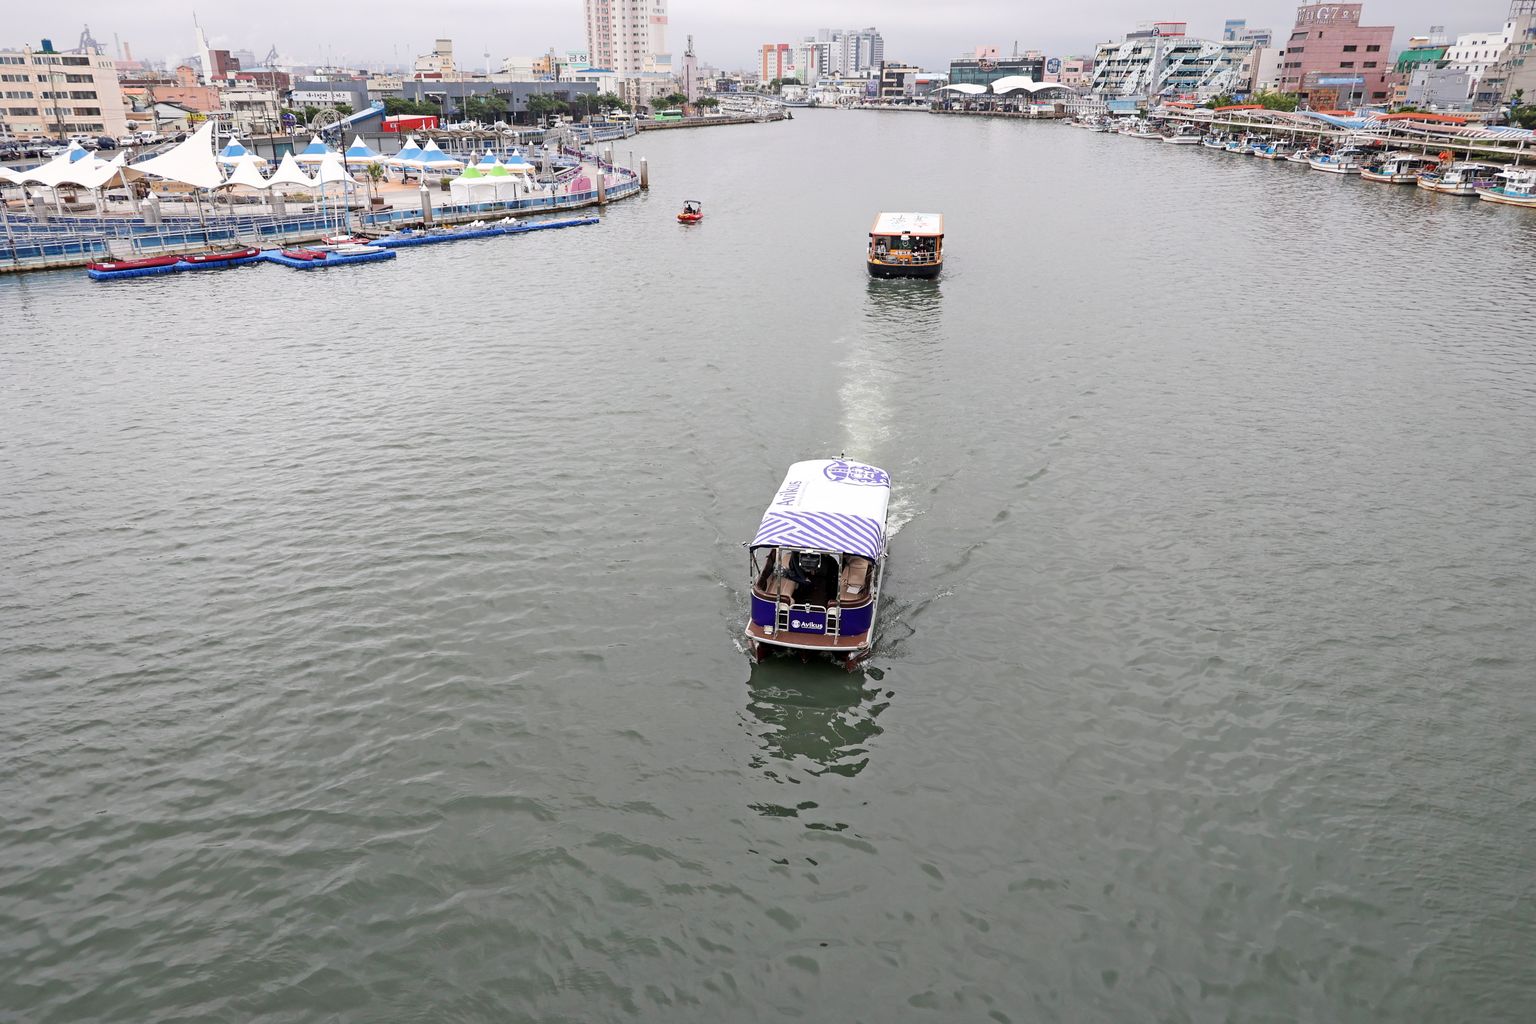 Laevajuhita turismilaeva katsetused Pohangi kanalil